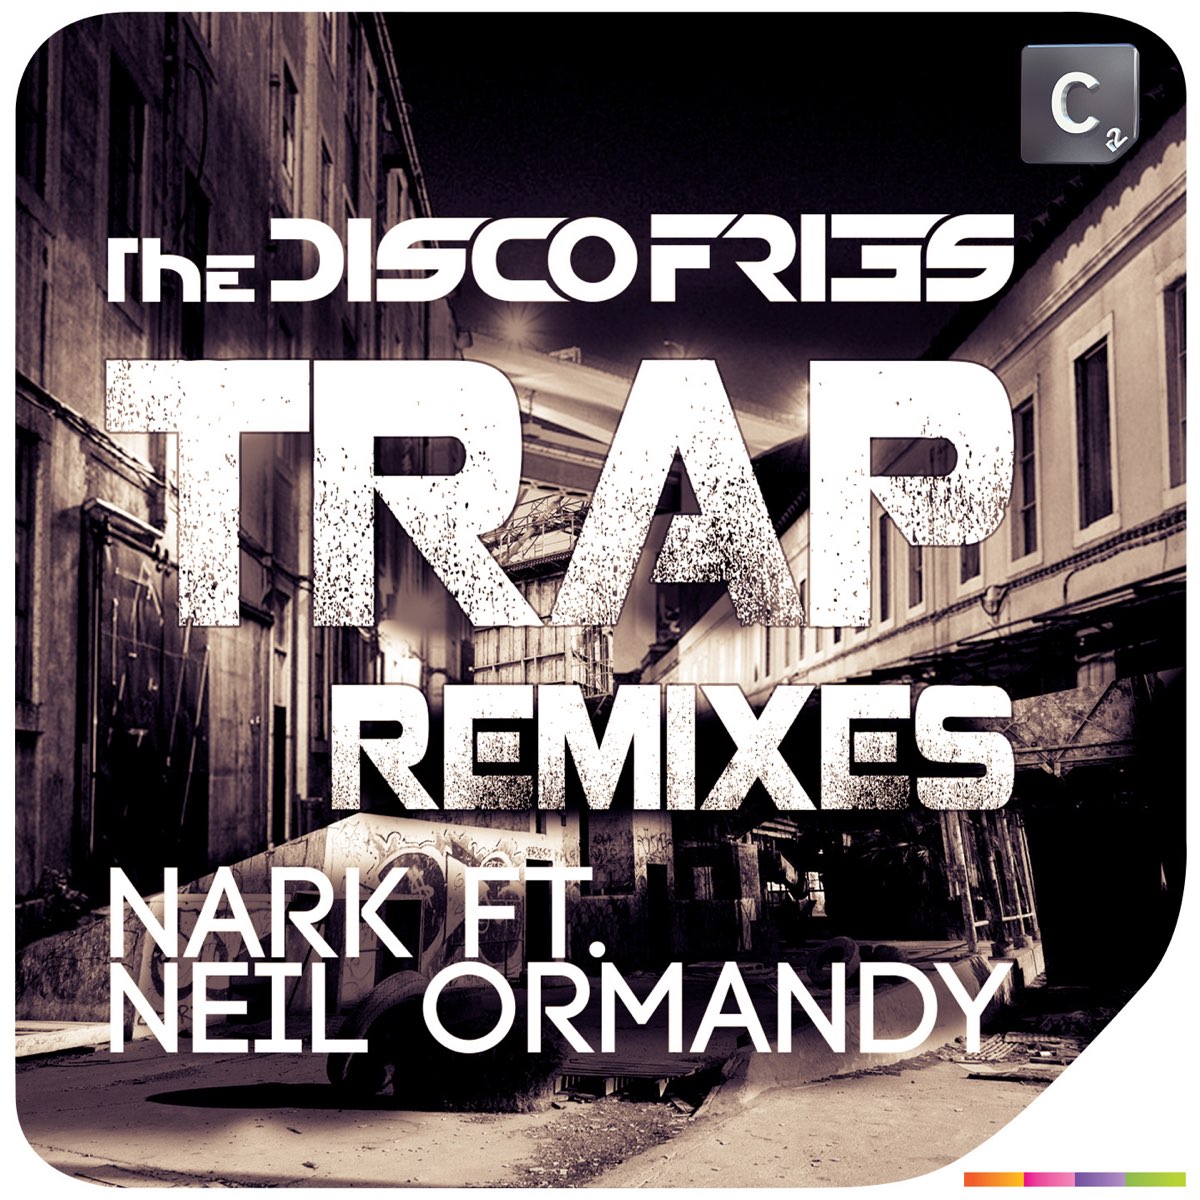 Nark. Ark remix